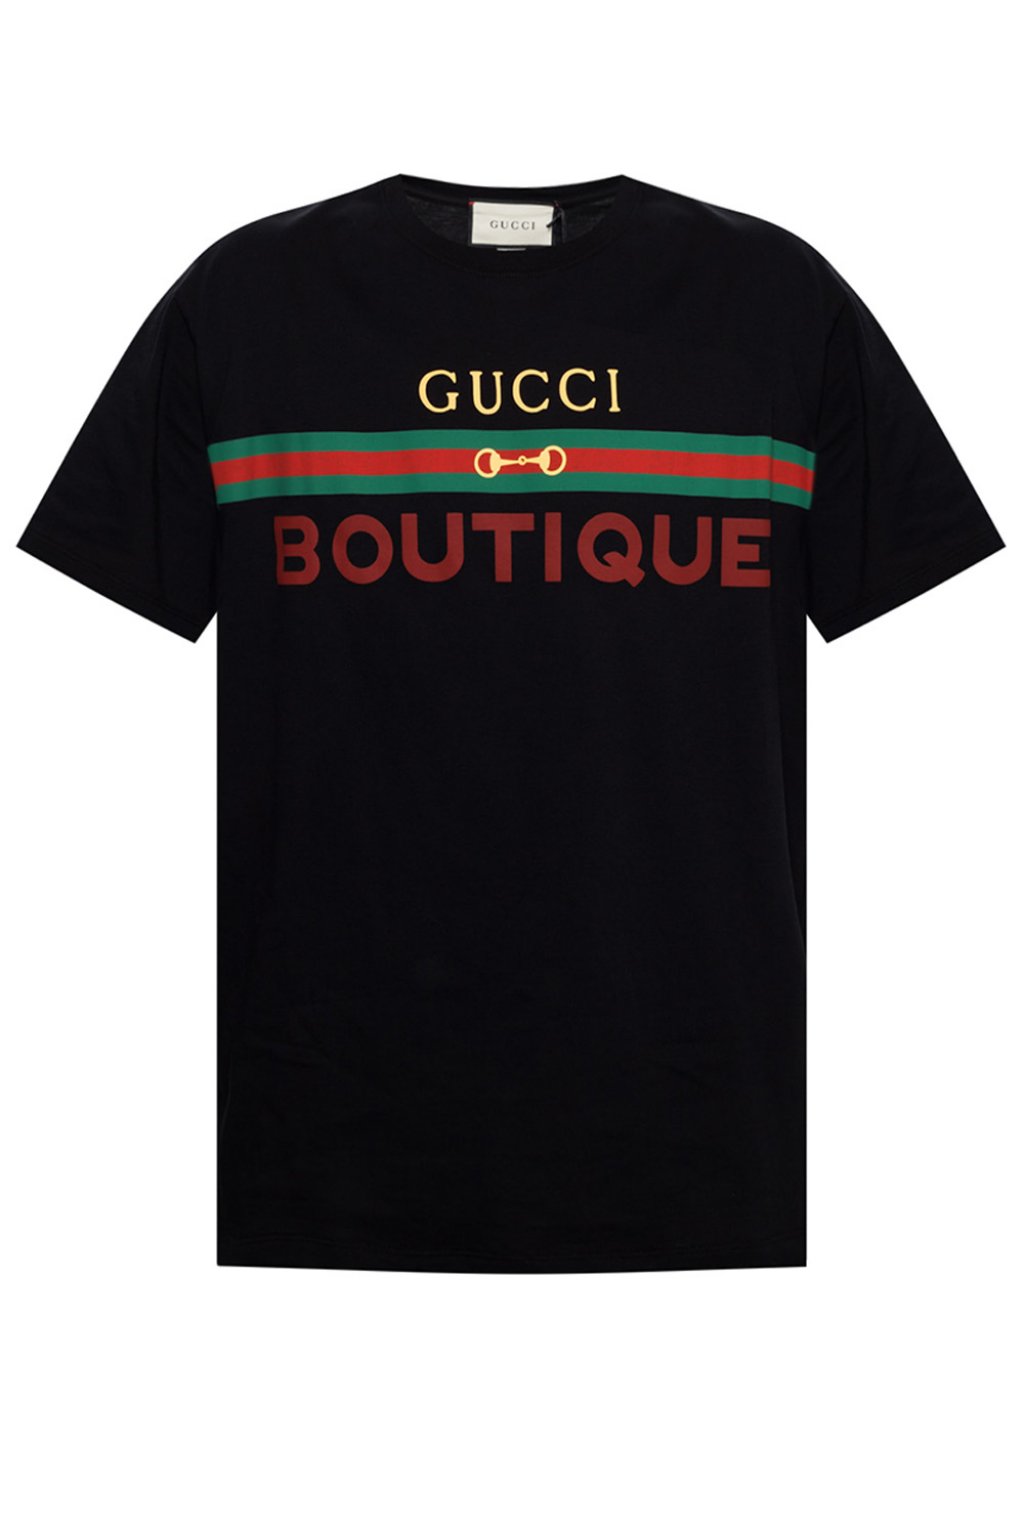 Logo T-shirt Gucci - Vitkac Canada